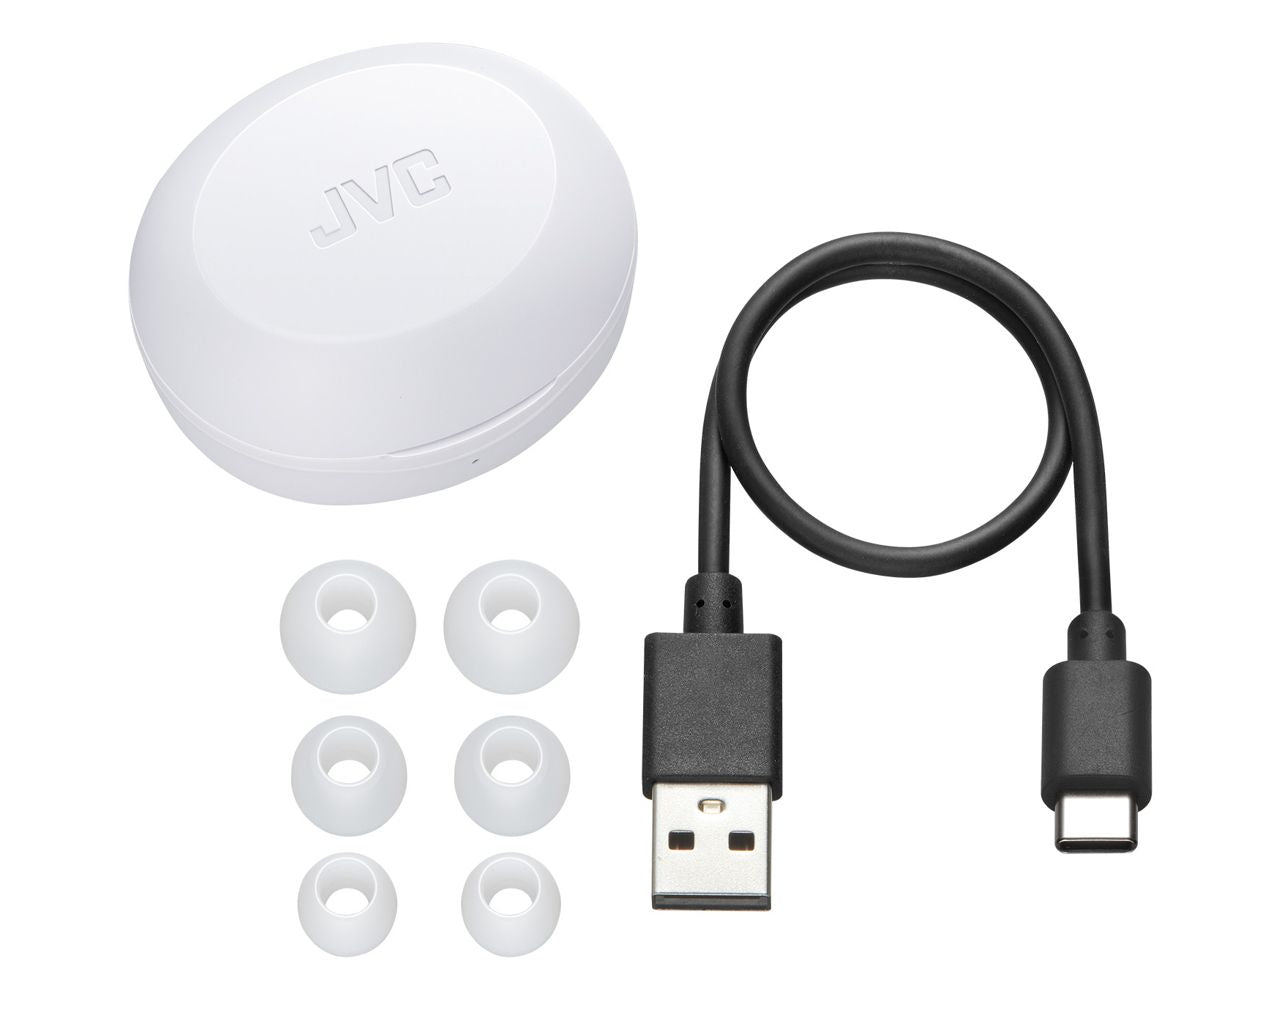 JVC HA-A5T-WN-E headphones/headset True Wireless Stereo (TWS) In-ear Calls/Music Bluetooth White